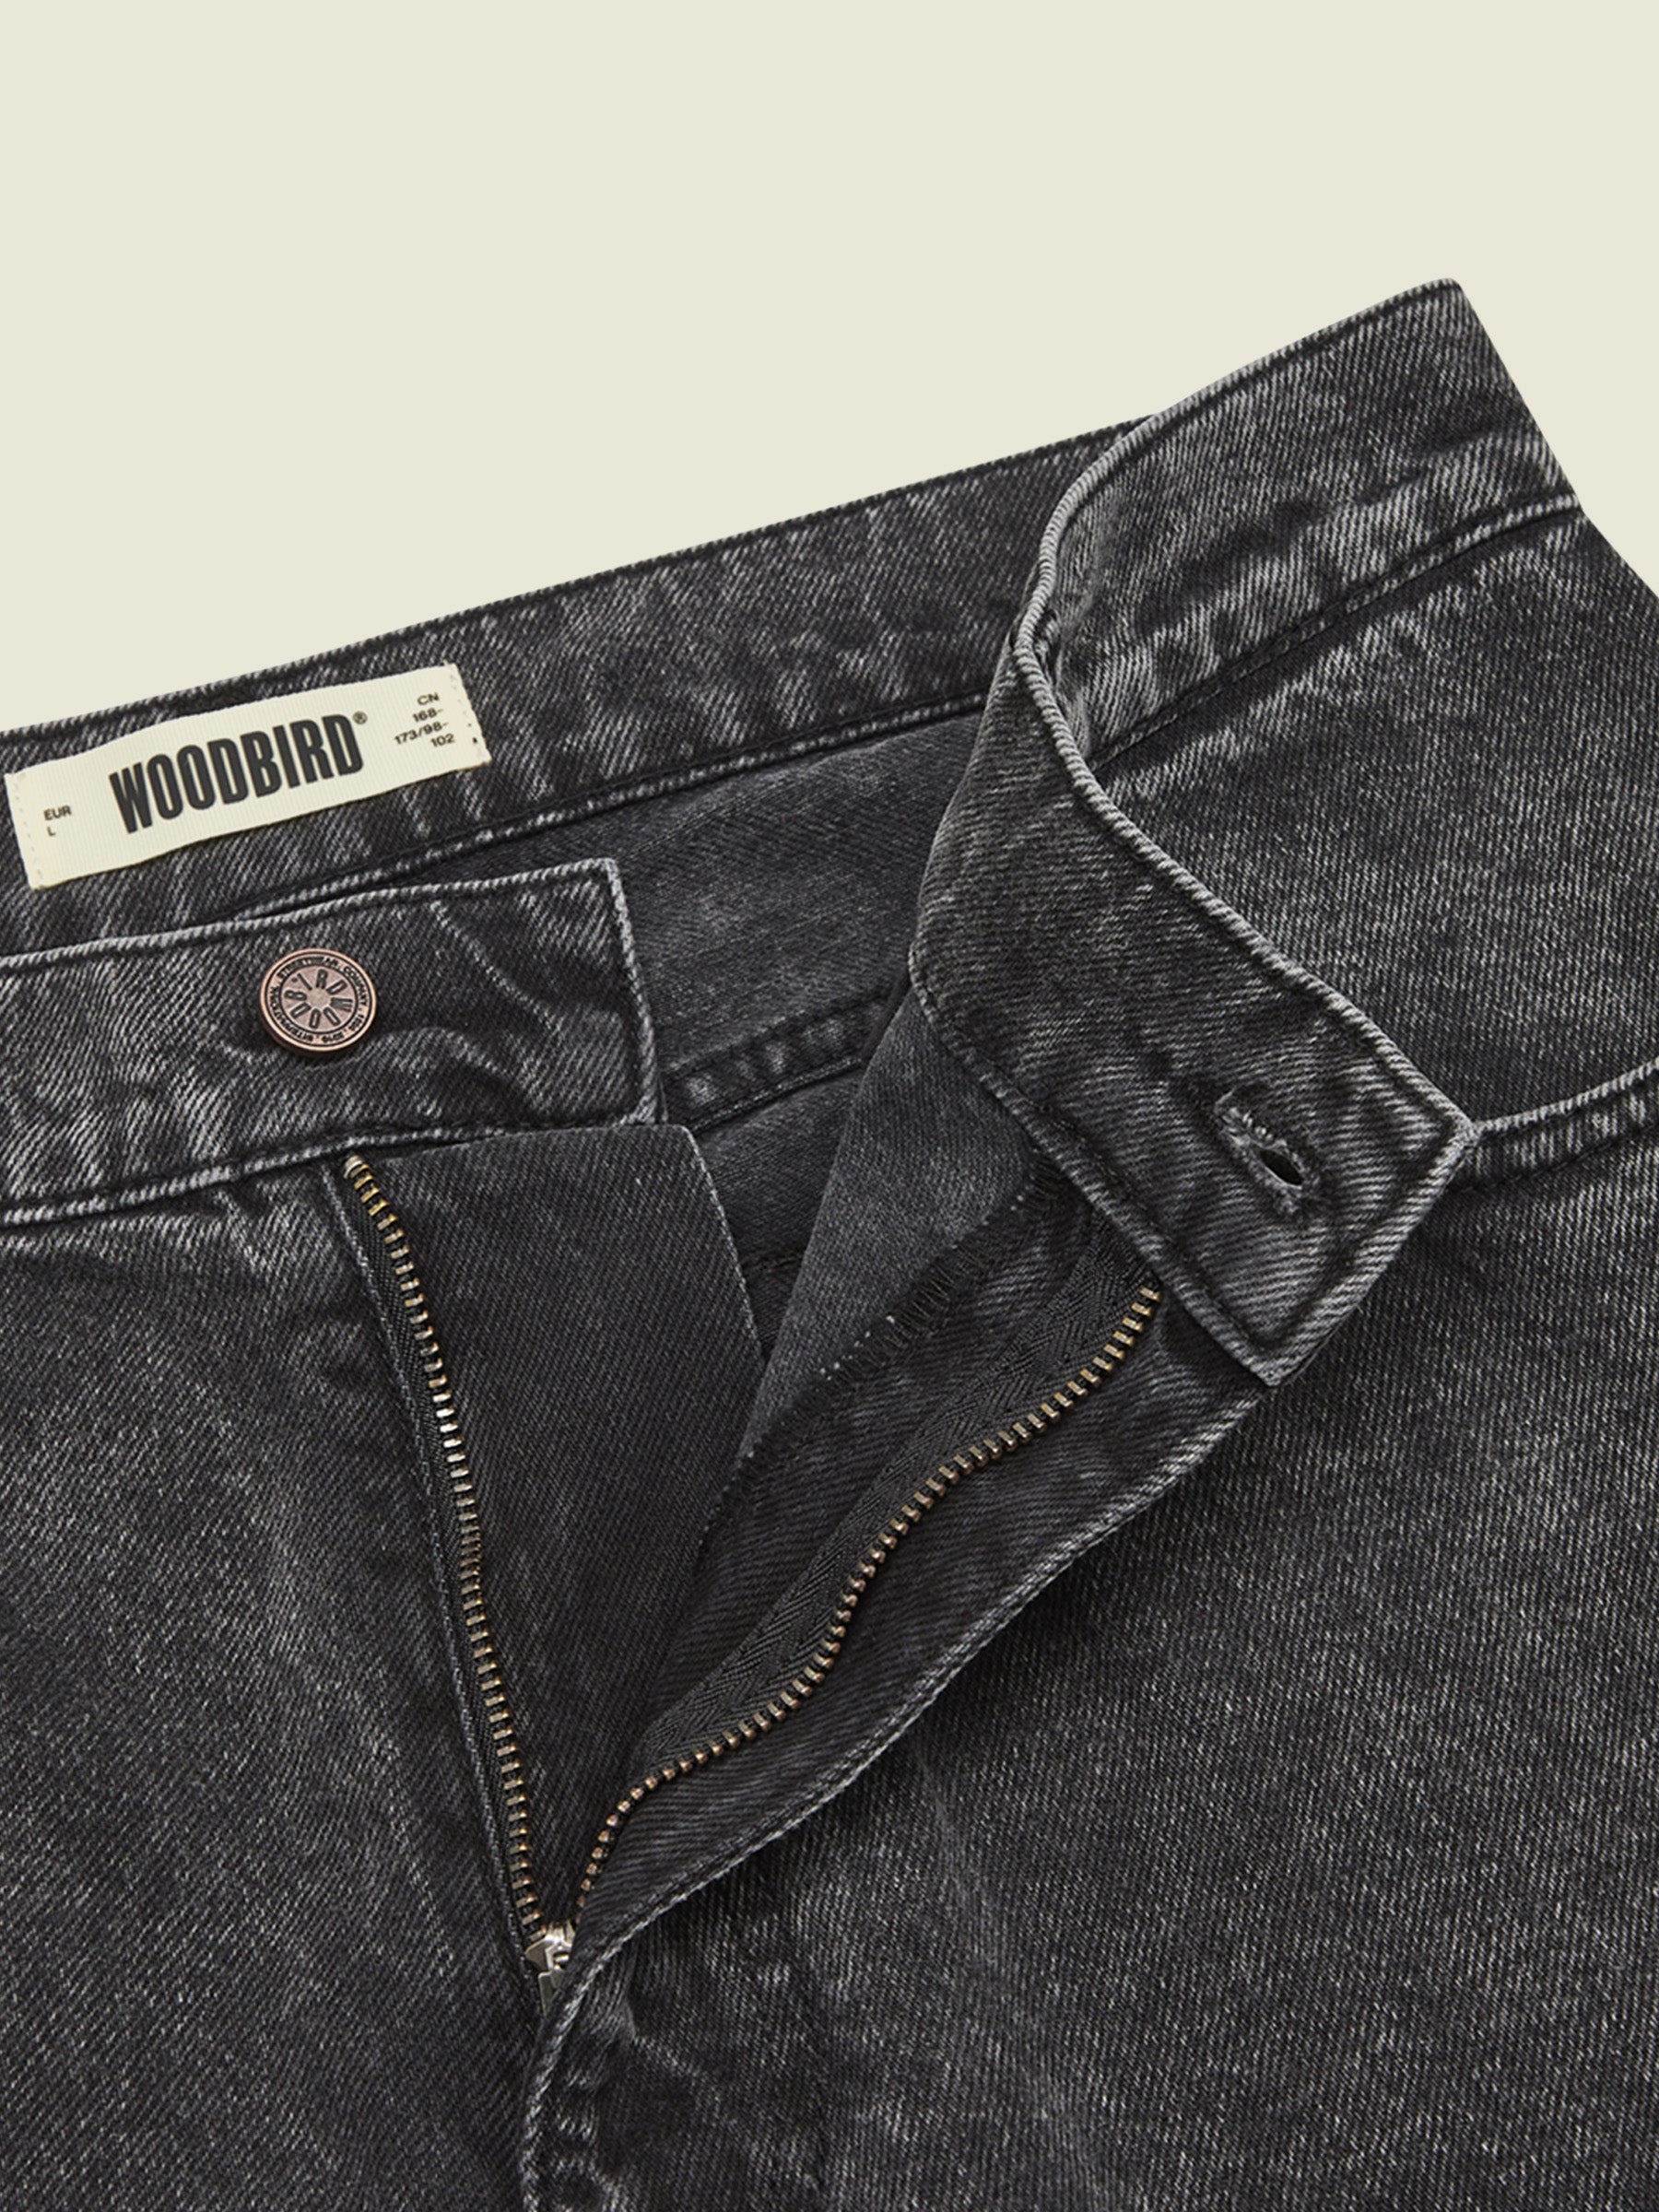 Woodbird Leroy Thun Black Jeans Jeans Dark Grey